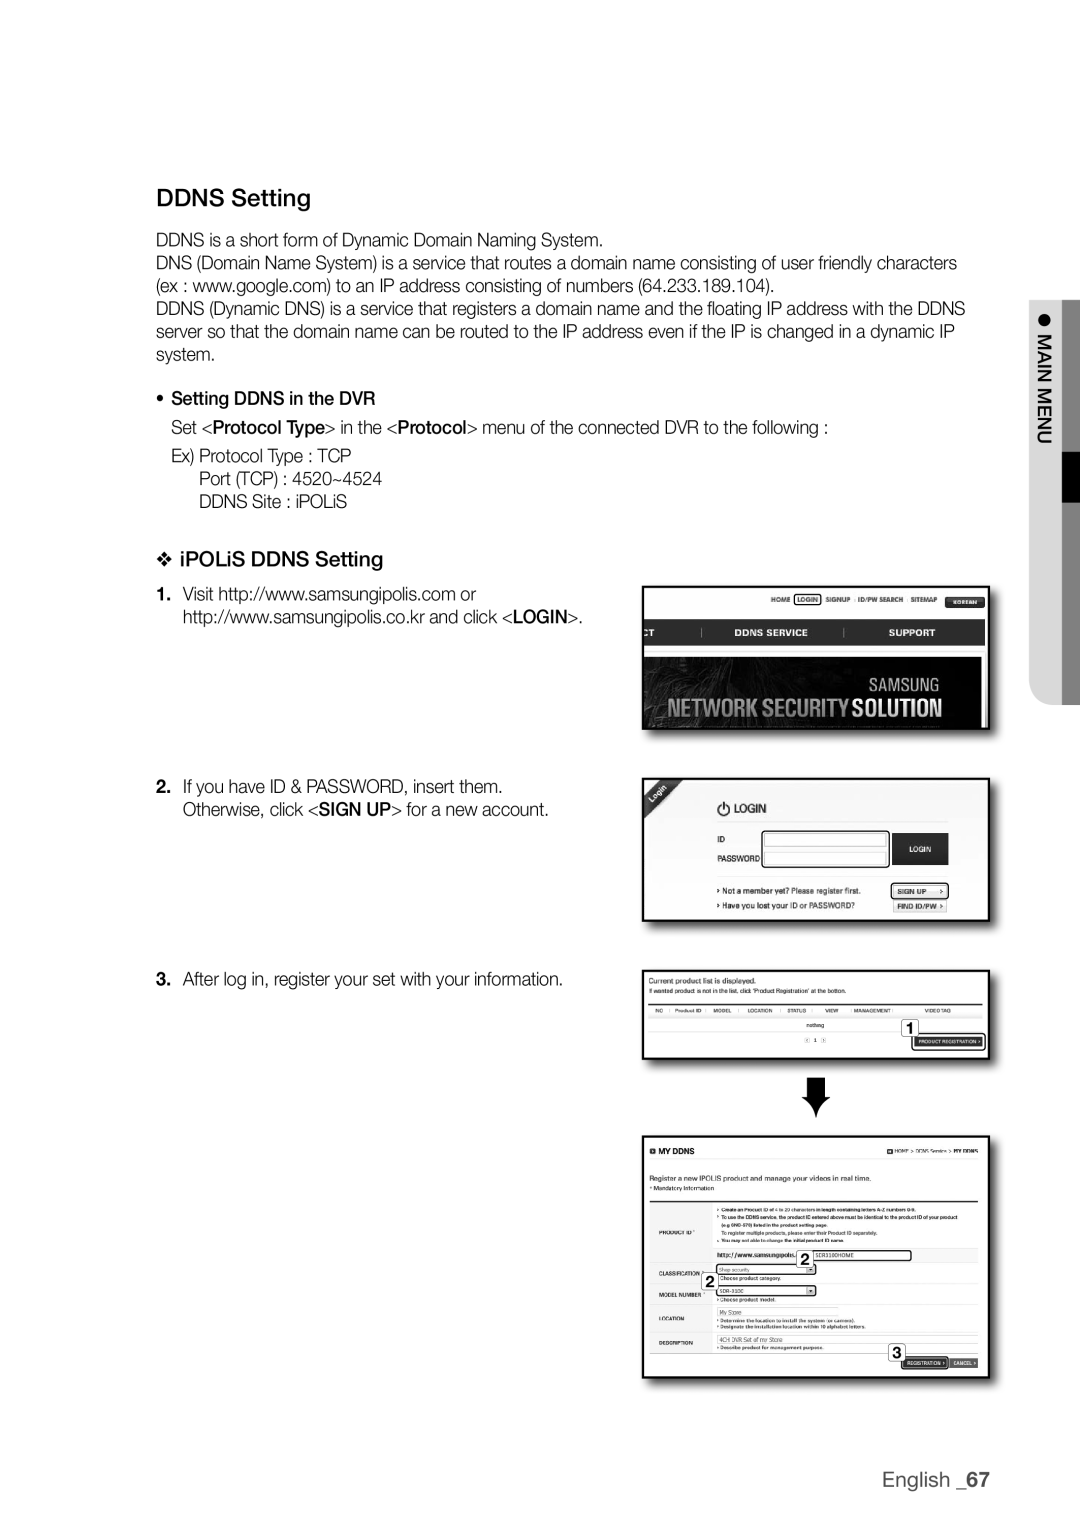 Samsung SDR3100 user manual iPOLiS DDnS Setting, English _67 